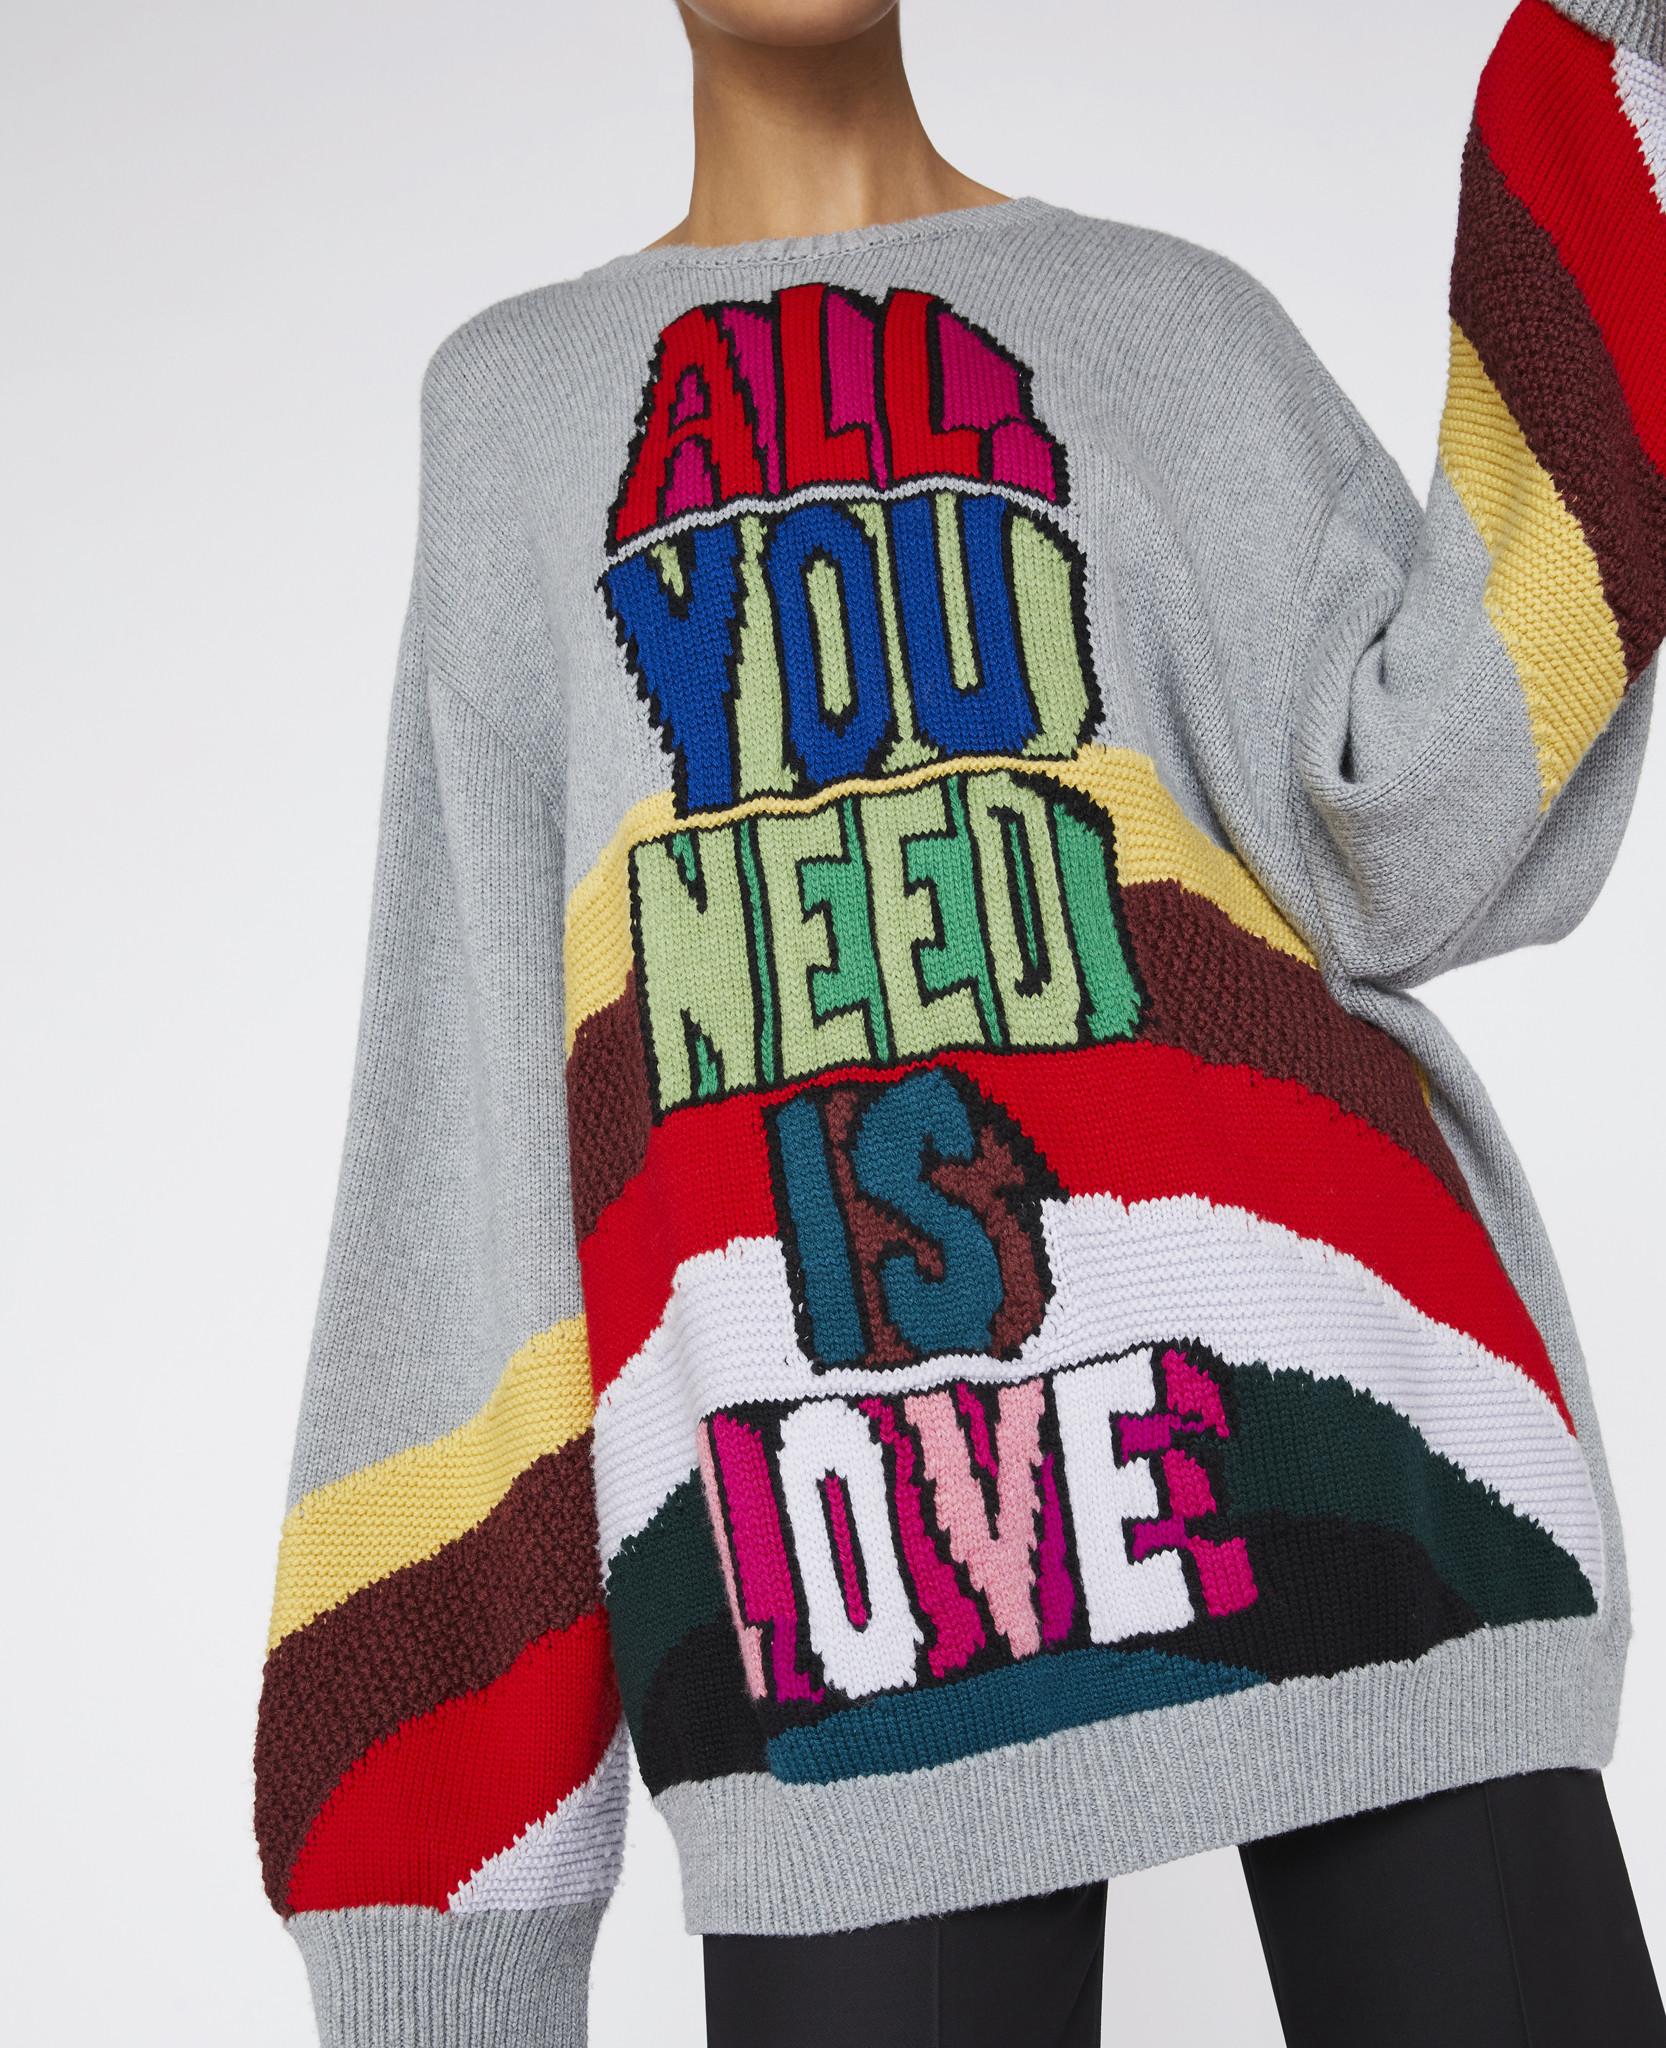 Stella McCartney All You Need Is Love Jacquard Wool Sweater | Lyst